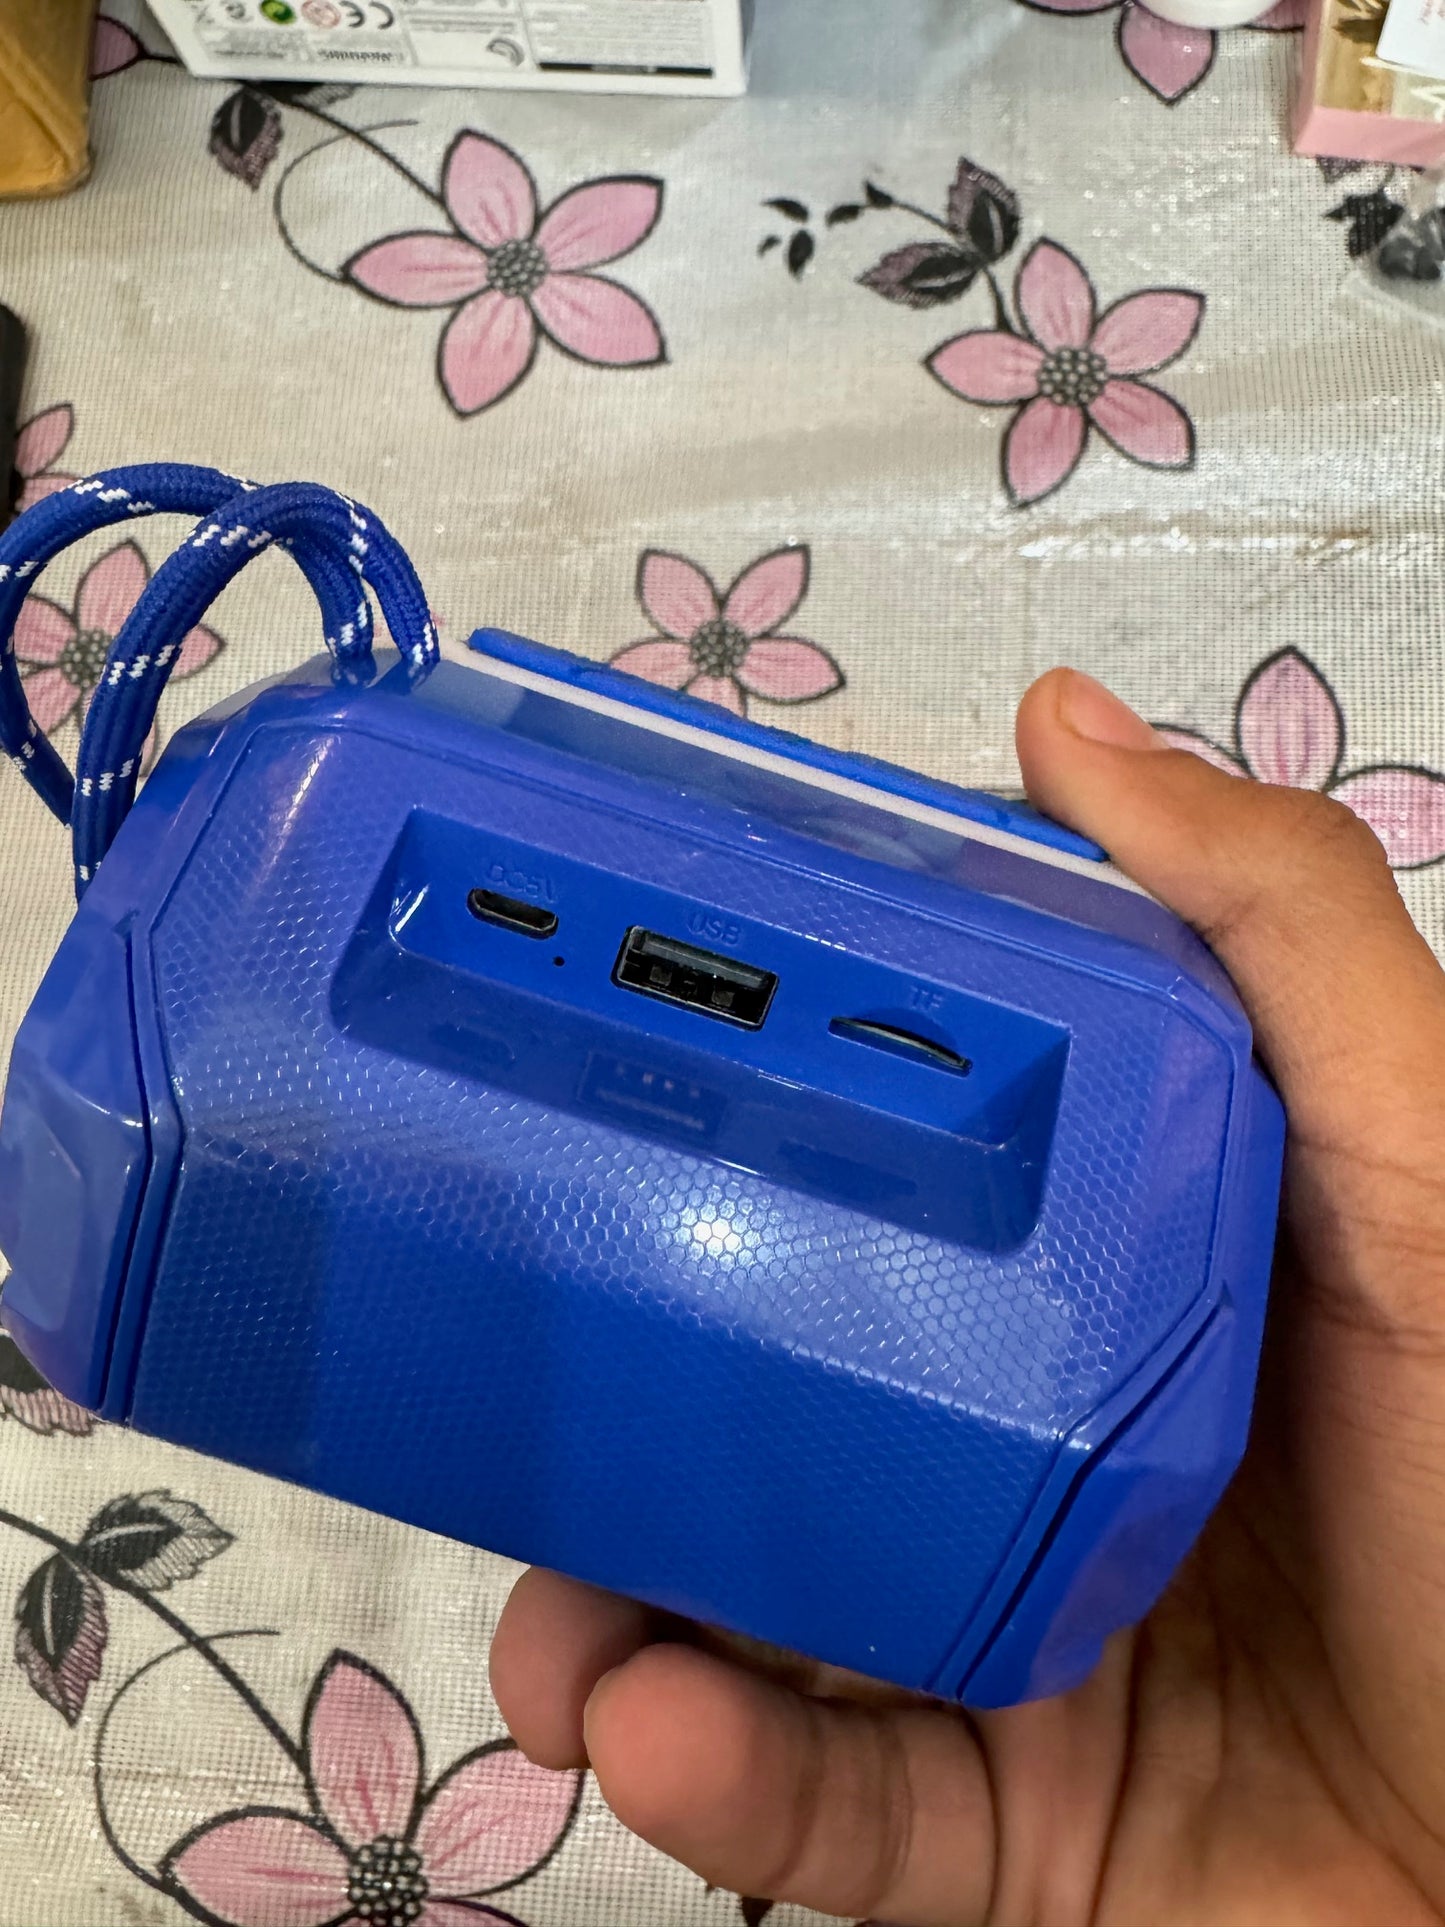 A500 Bluethooth Speaker